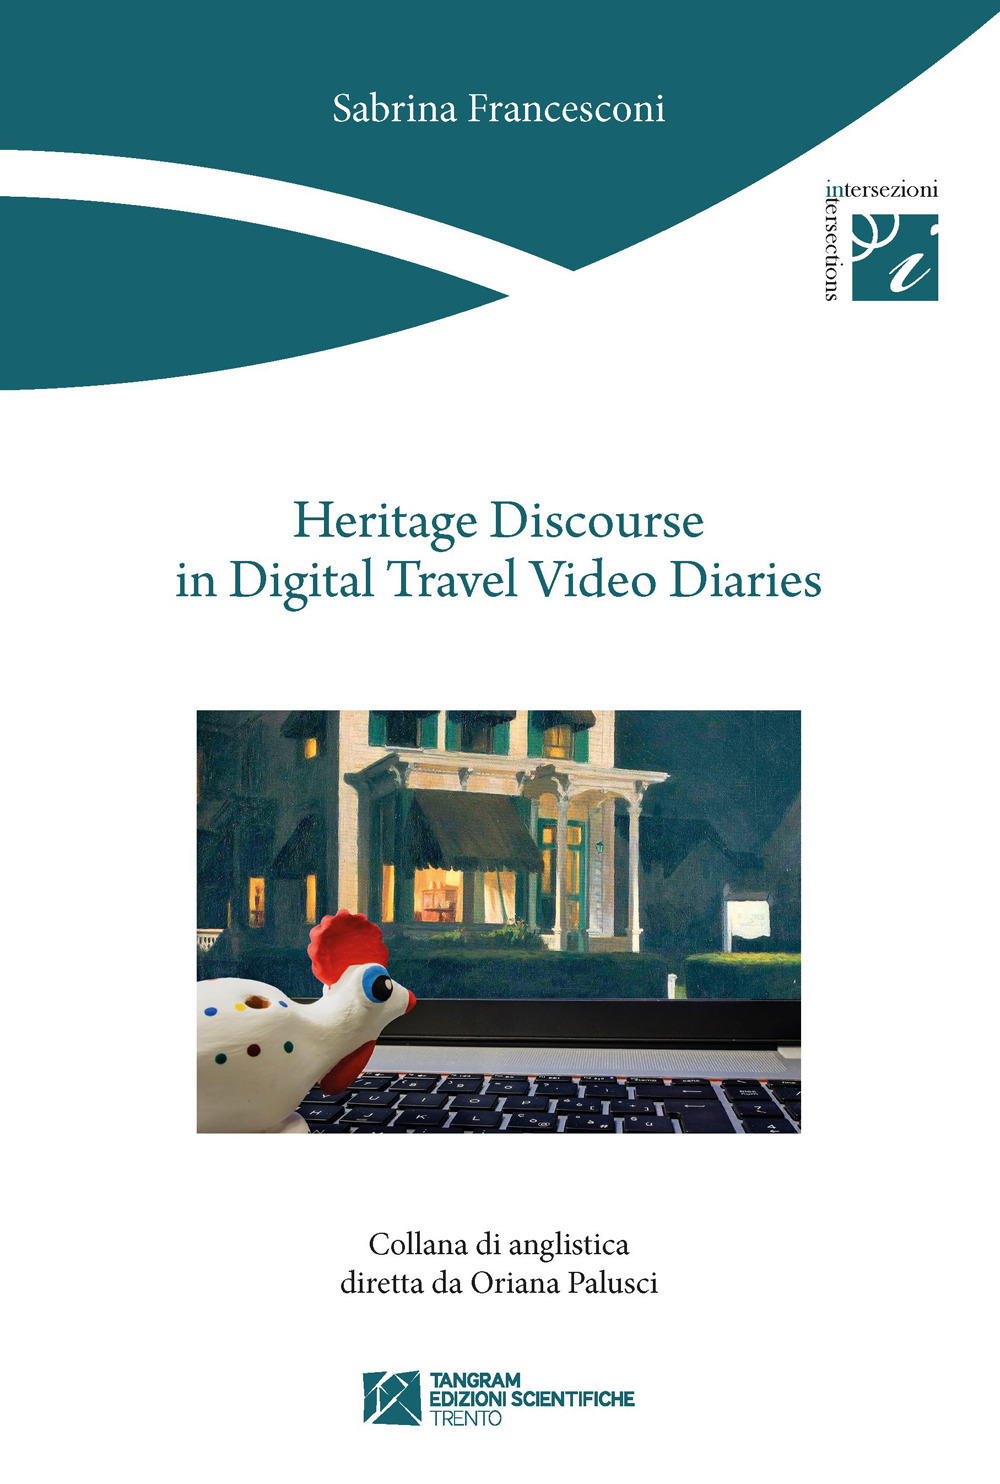 Heritage discourse in digital travel video diaries